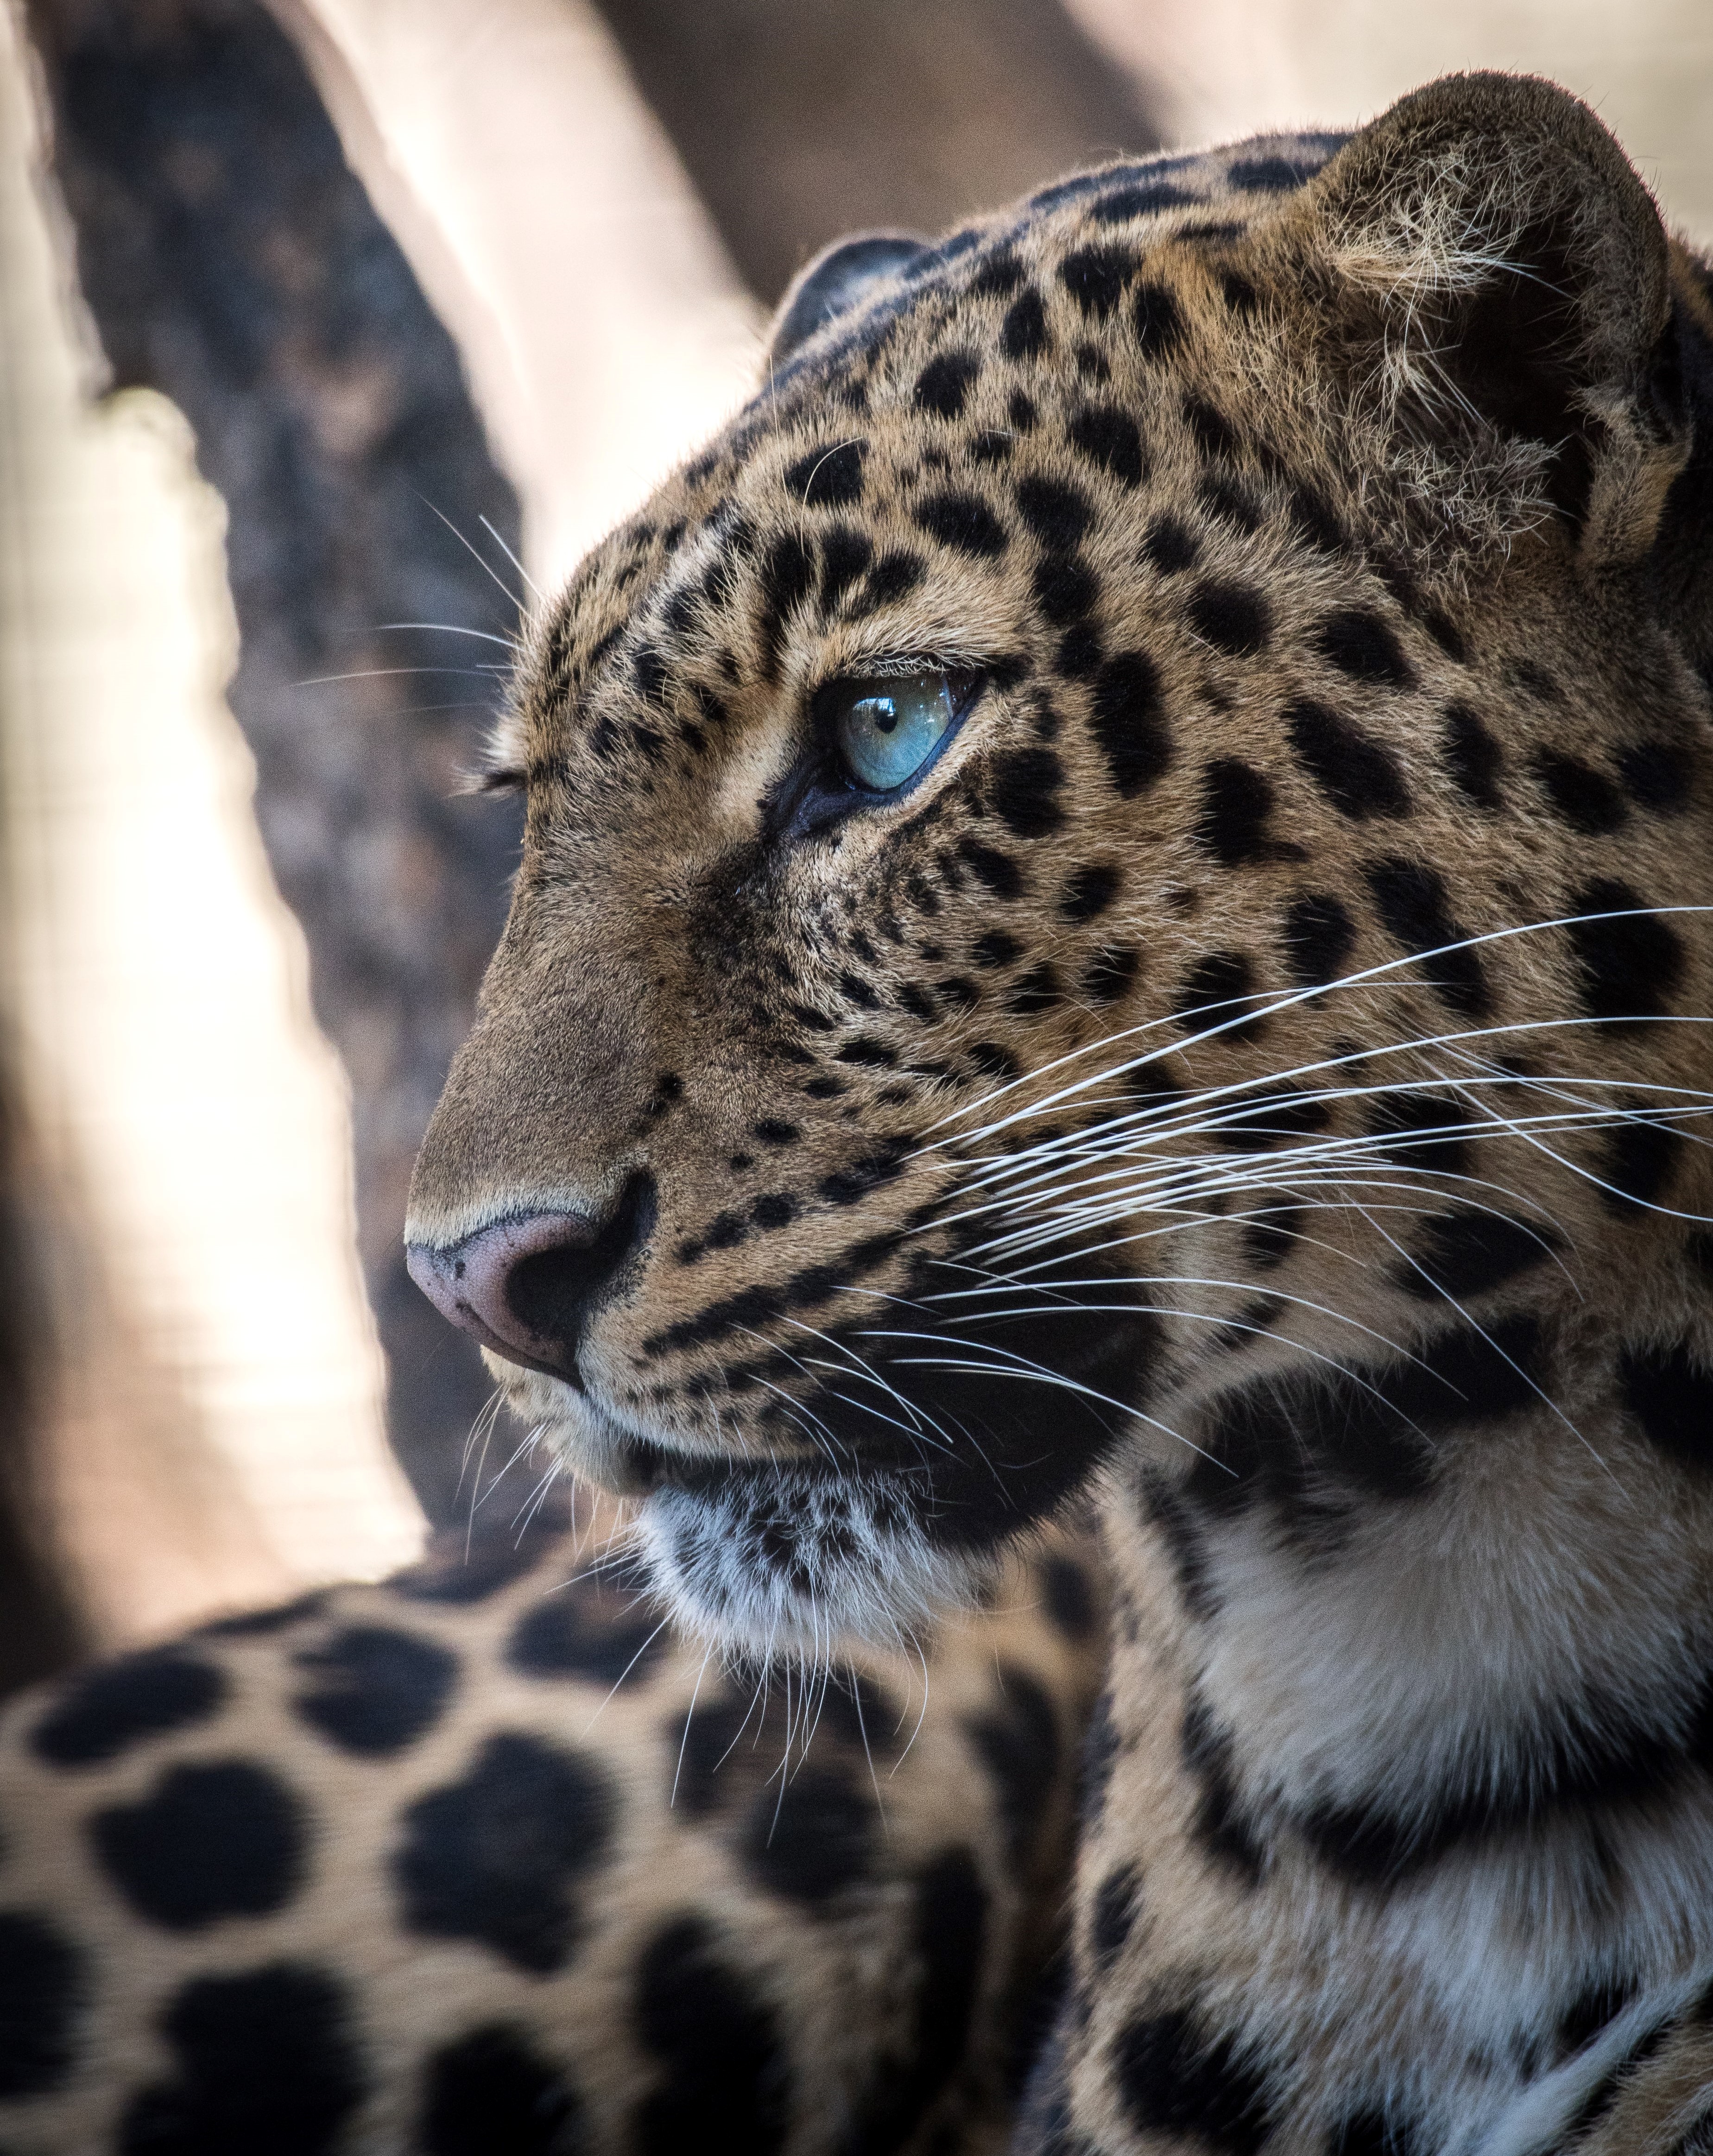 Jaguar. Photo by Uriel Soberanes on Unsplash